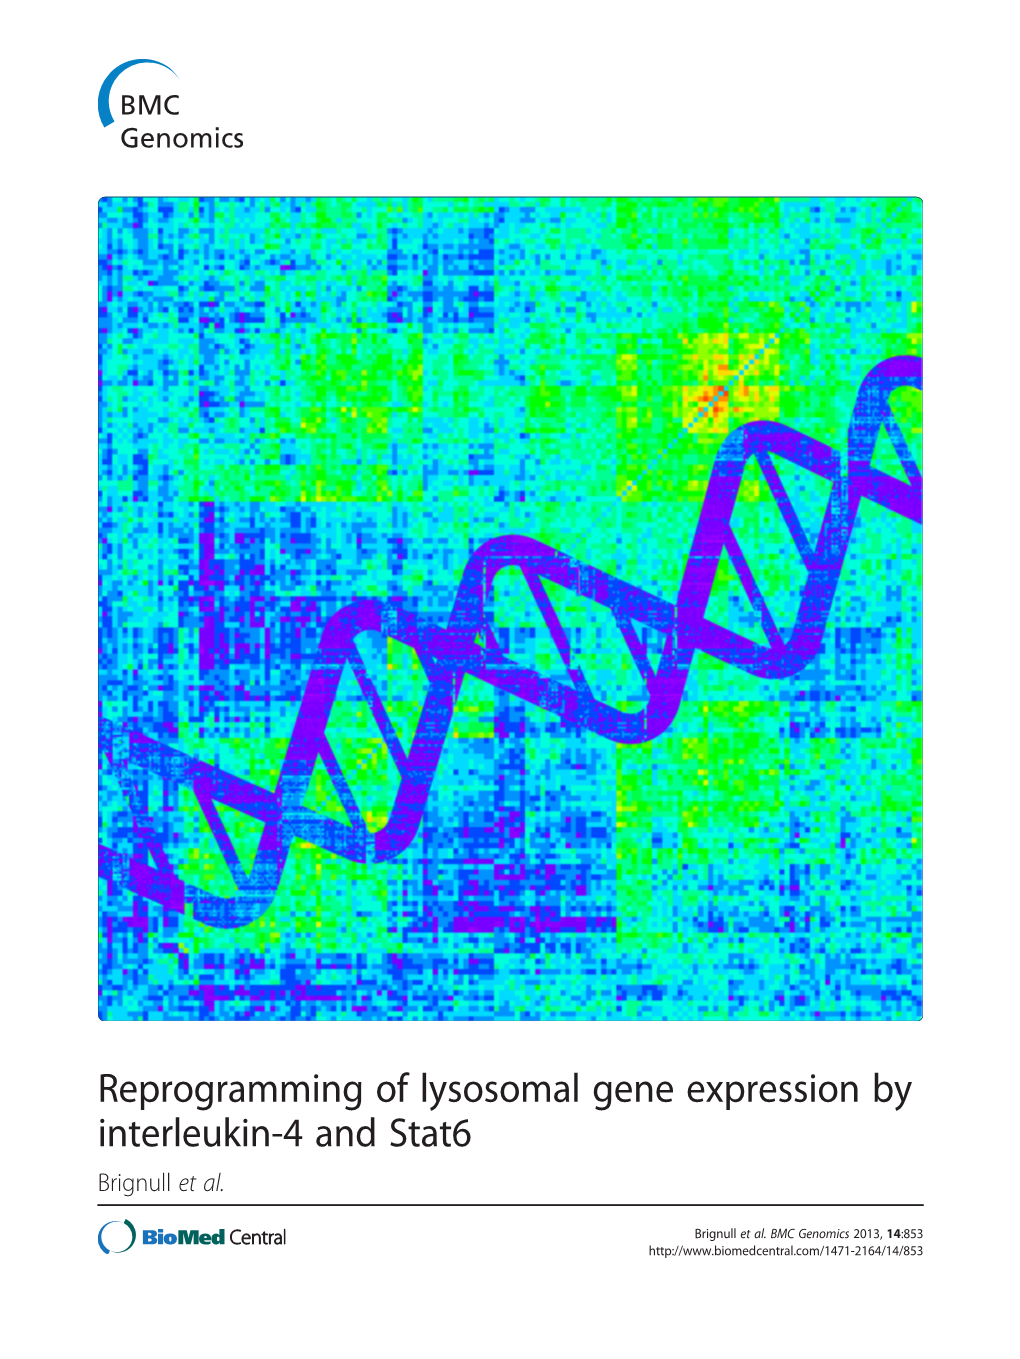 Reprogramming of Lysosomal Gene Expression by Interleukin-4 and Stat6 Brignull Et Al